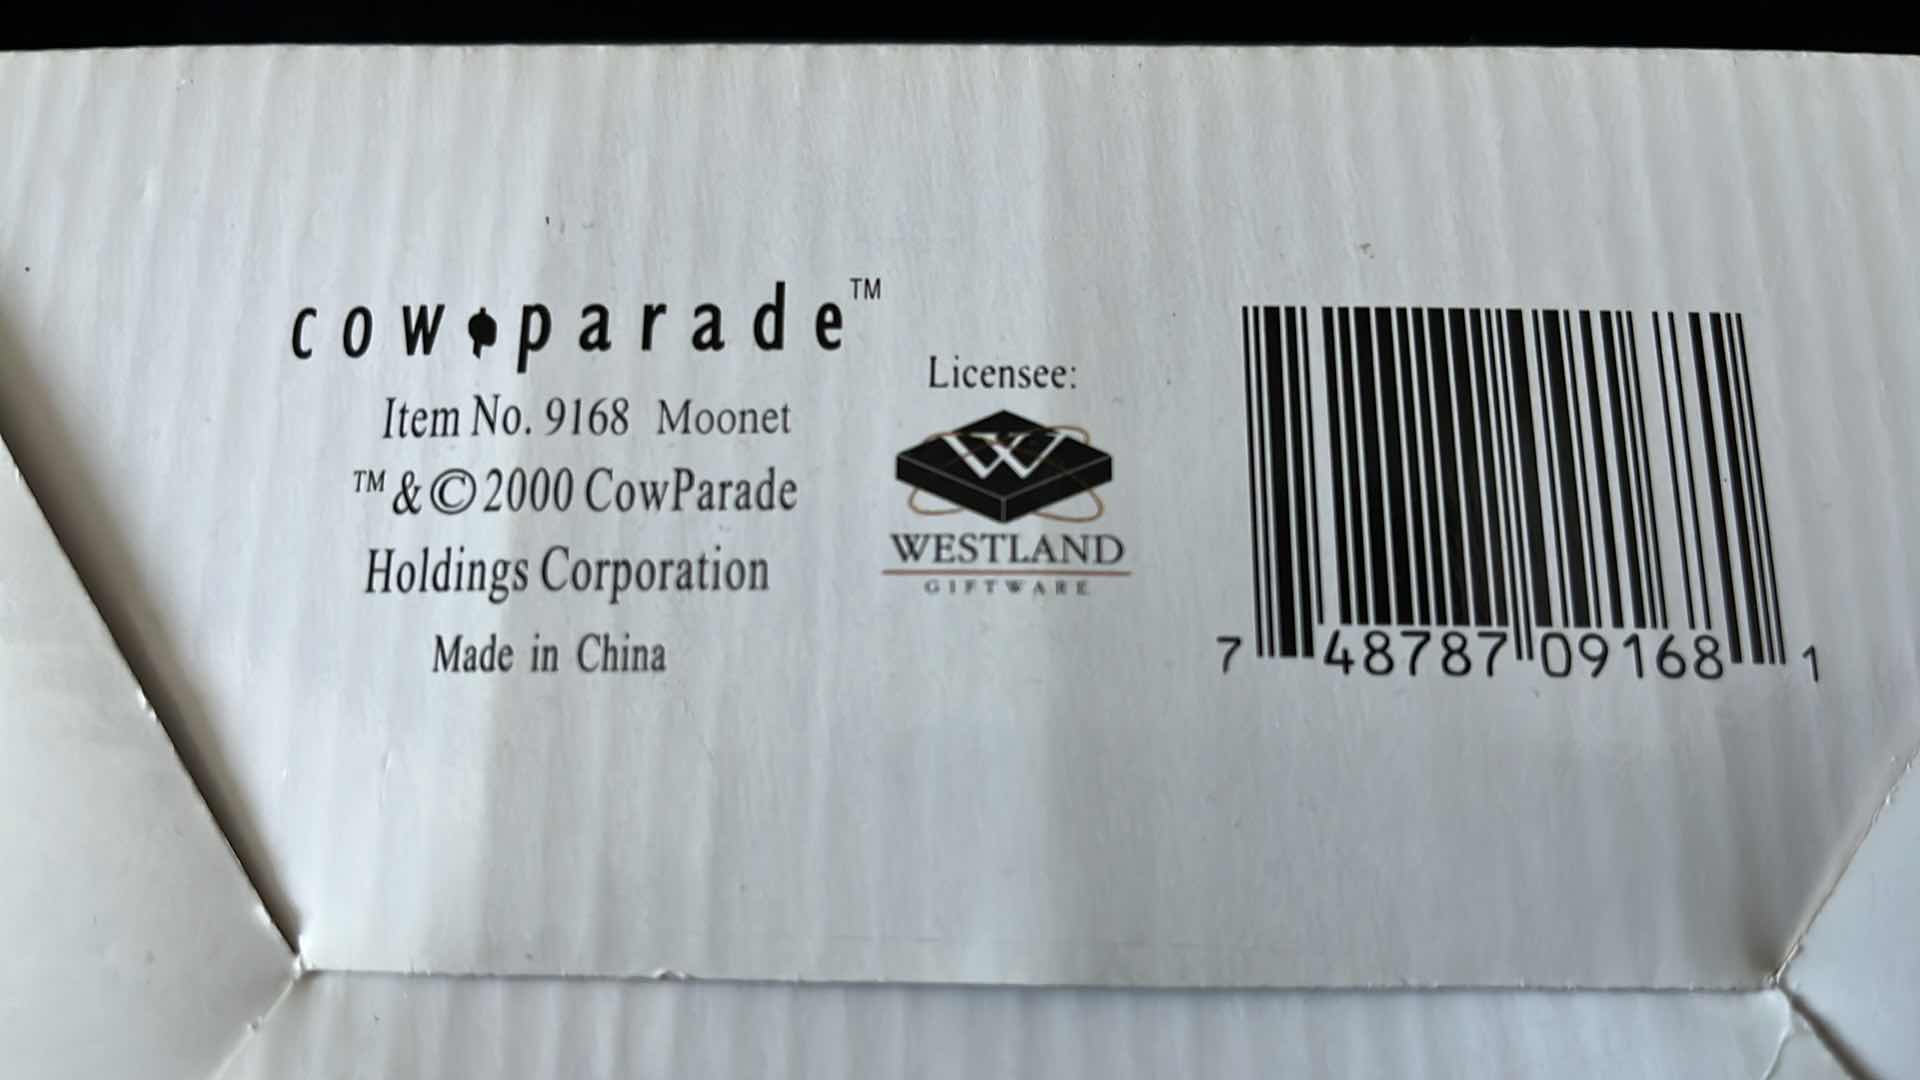 Photo 7 of WESTLAND GIFTWARE COW PARADE MOONET FIGURINE 2000 (9168)